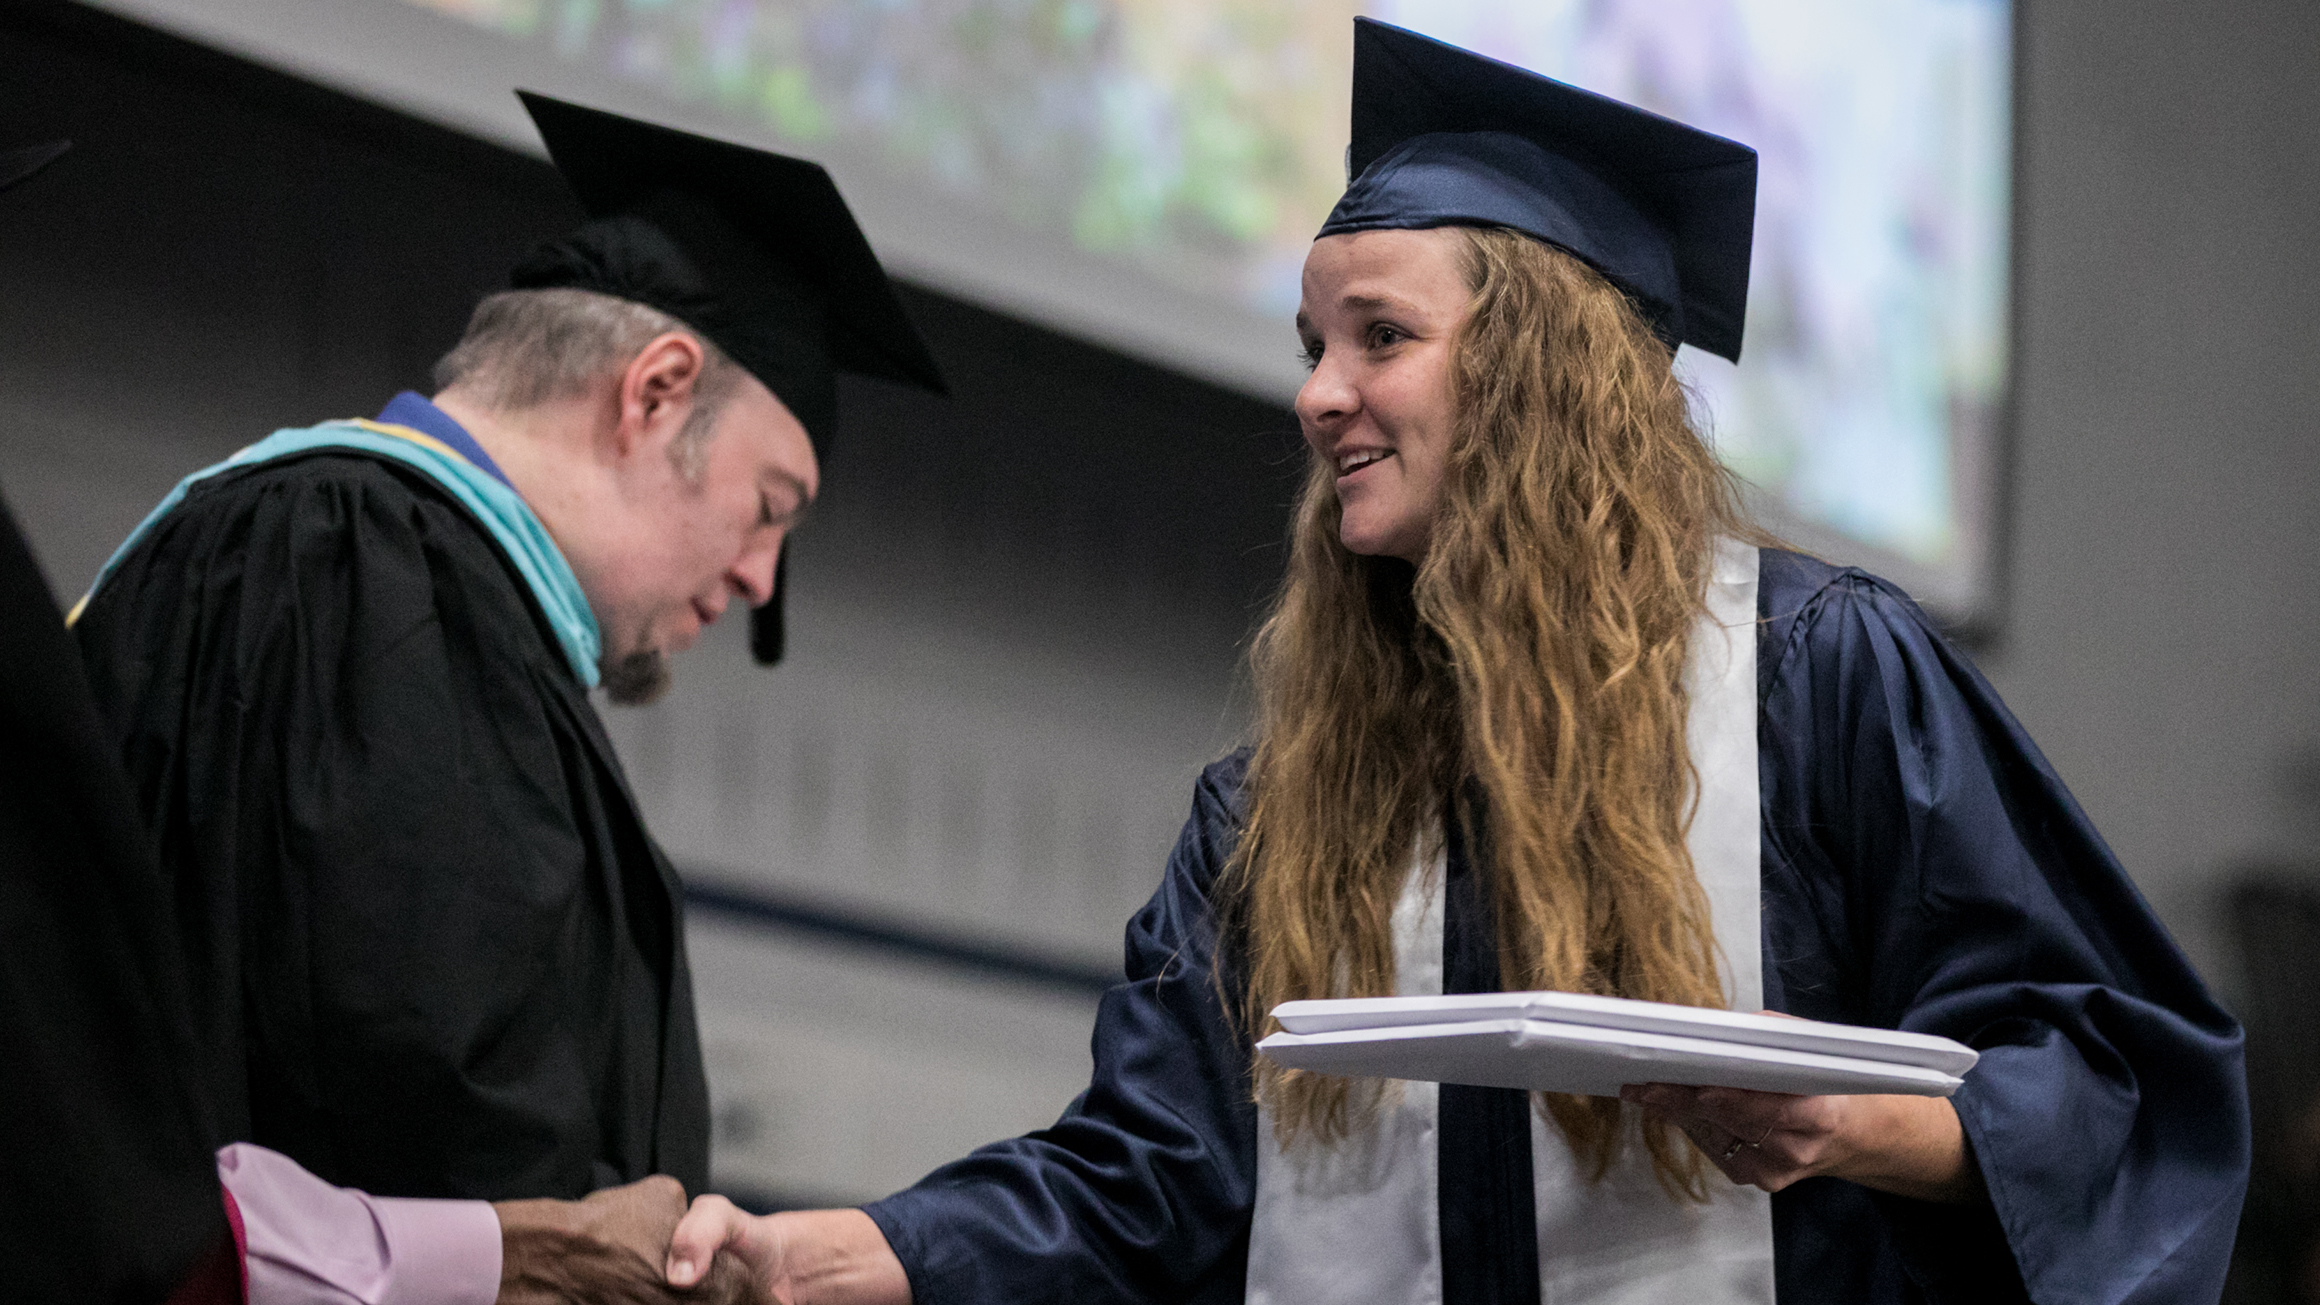 Military student receiving diploma at graduation